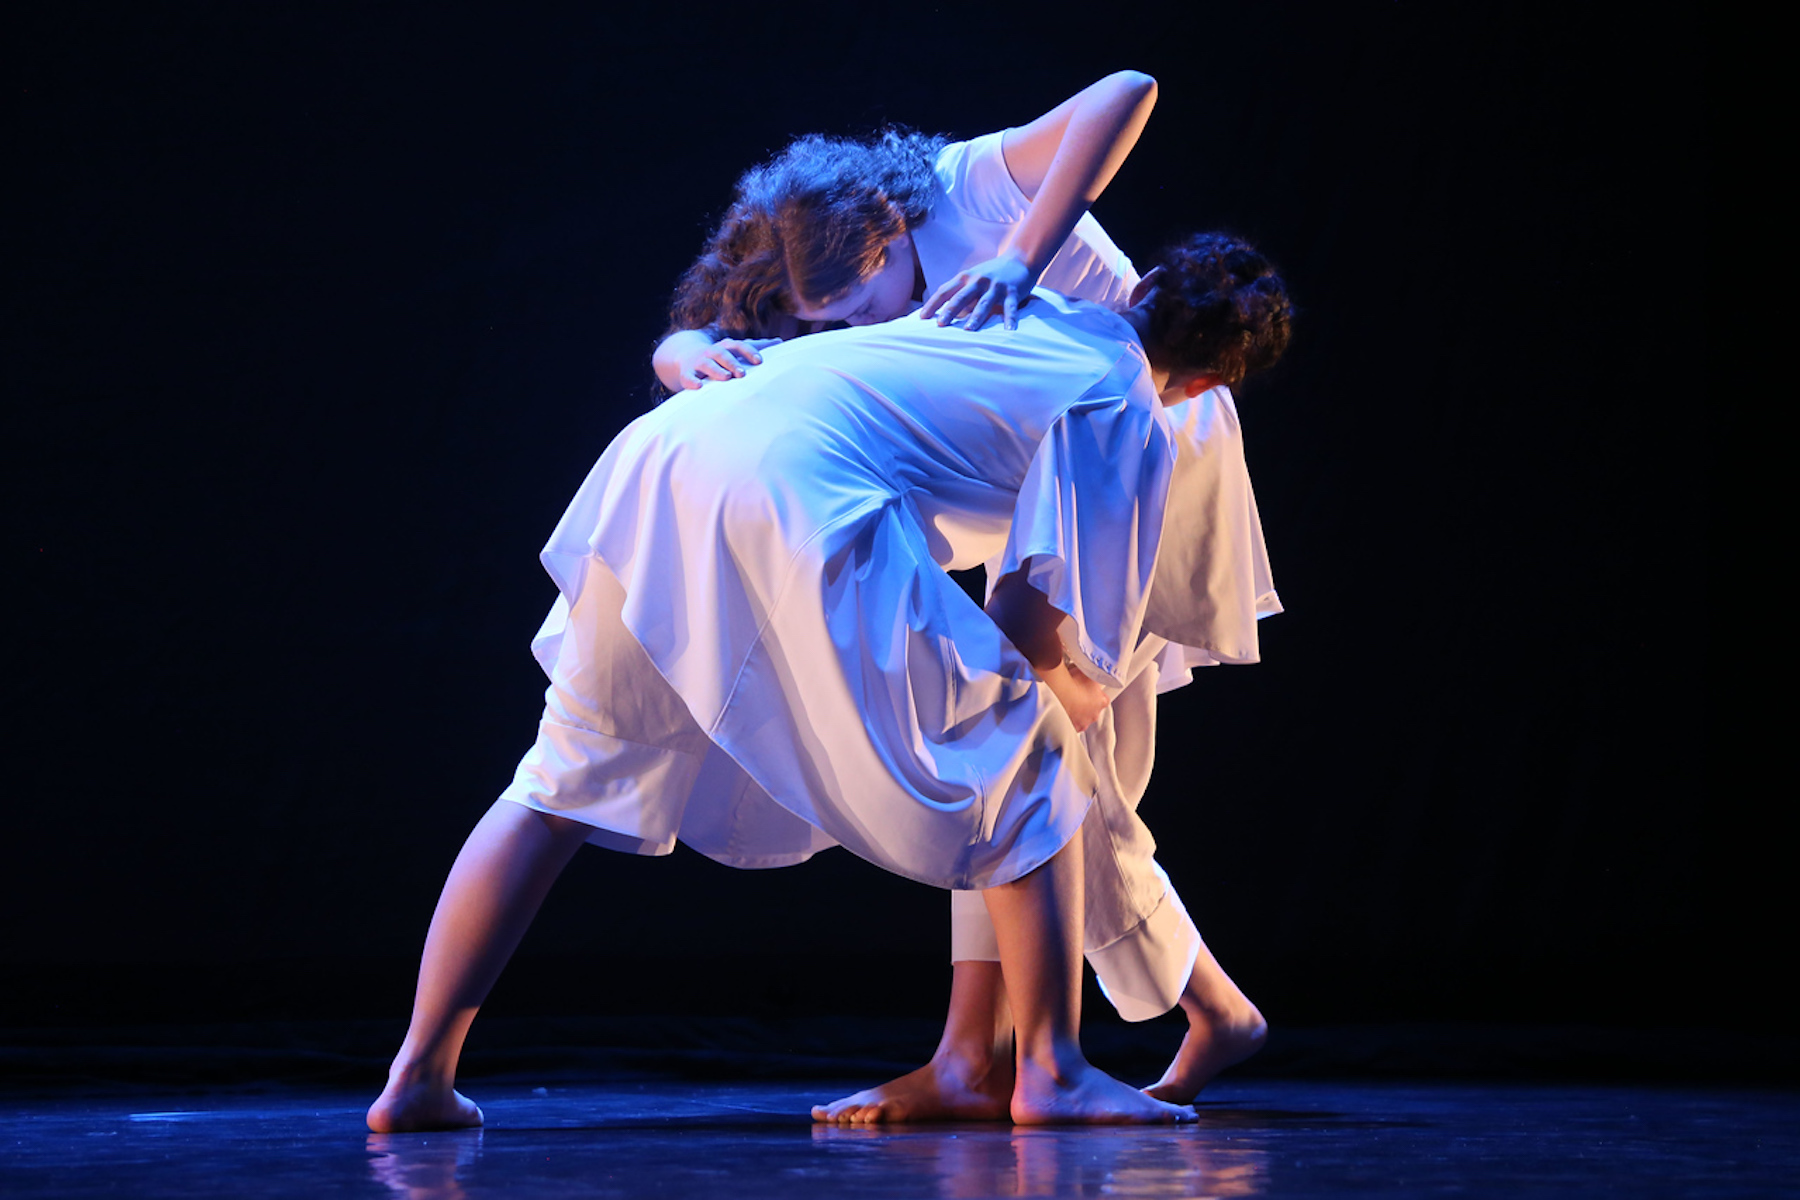 Fieldston Upper dancers perform routine on stage, wearing all white, the background is dark.